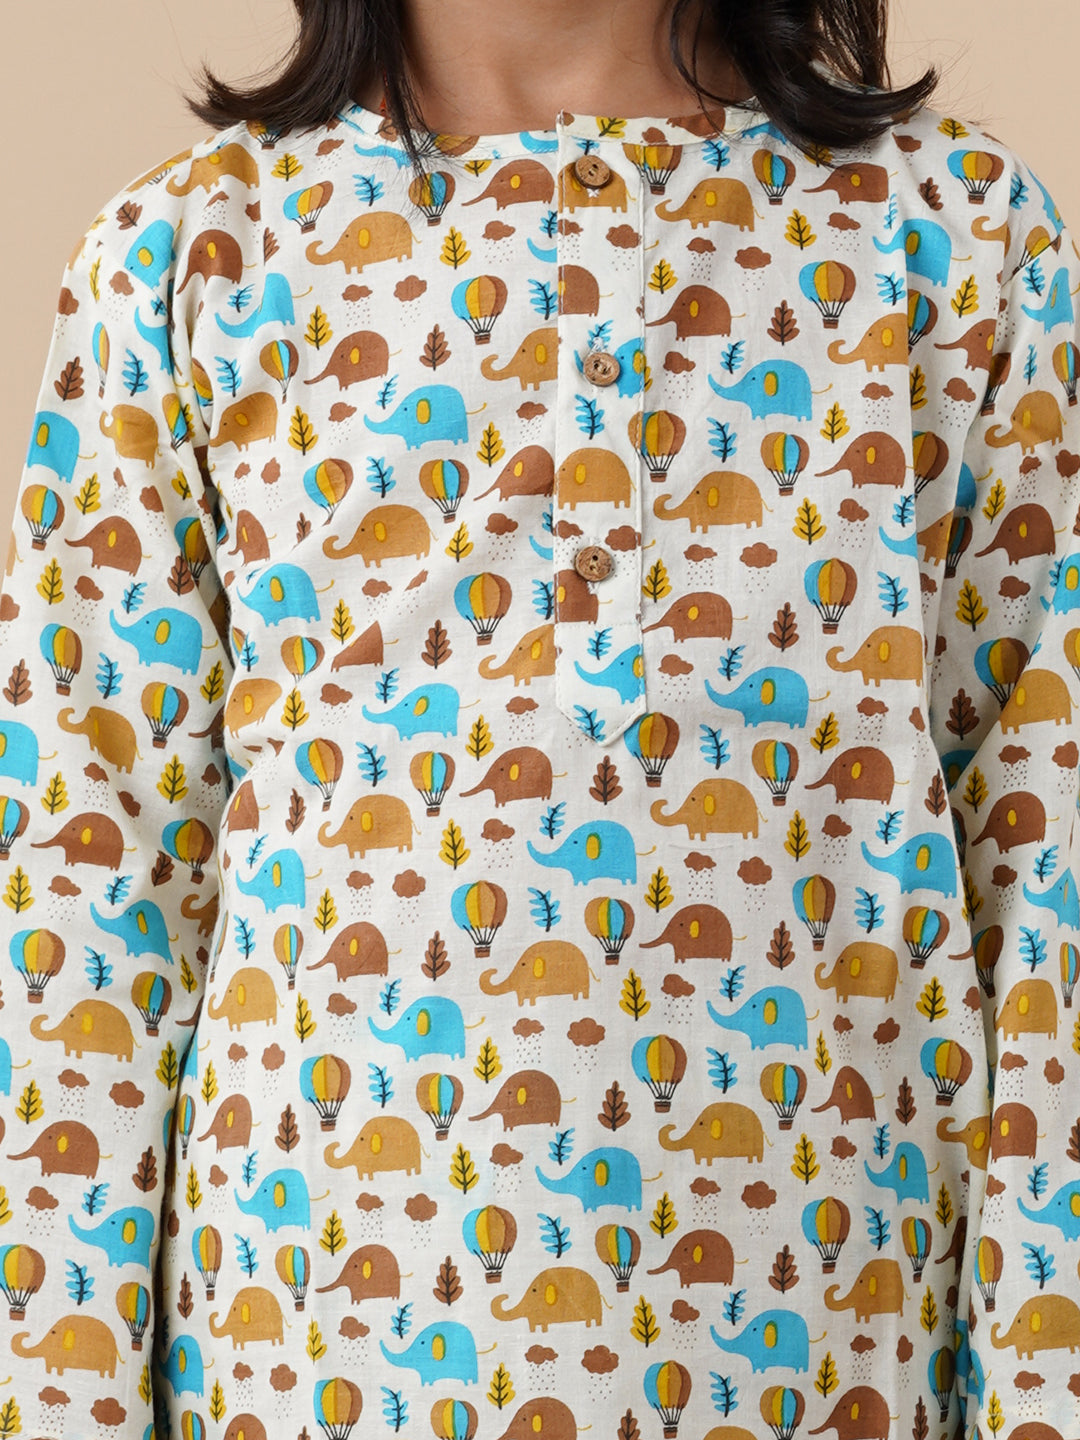 Blue and Brown Elephant Print Kids Cotton Kurta Pyjama Set